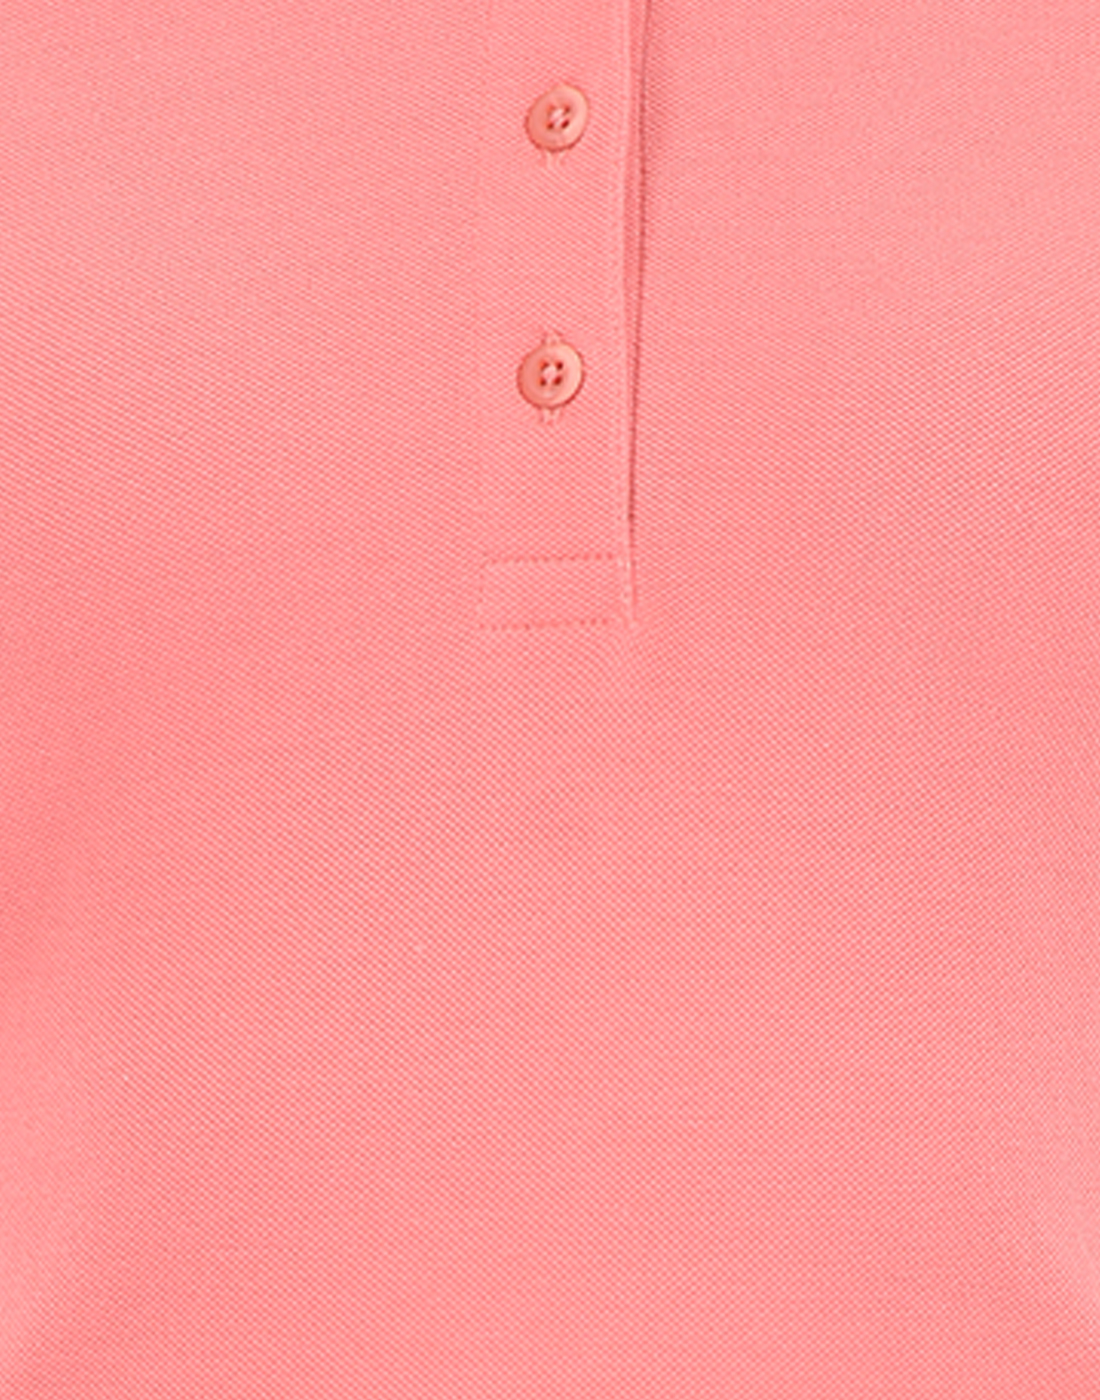 ONEWAY Half Sleeve Solid Polo Neck T-Shirt for Women|100% Cotton Pique|Regular Fit|Casual Women Wear|Western Wear